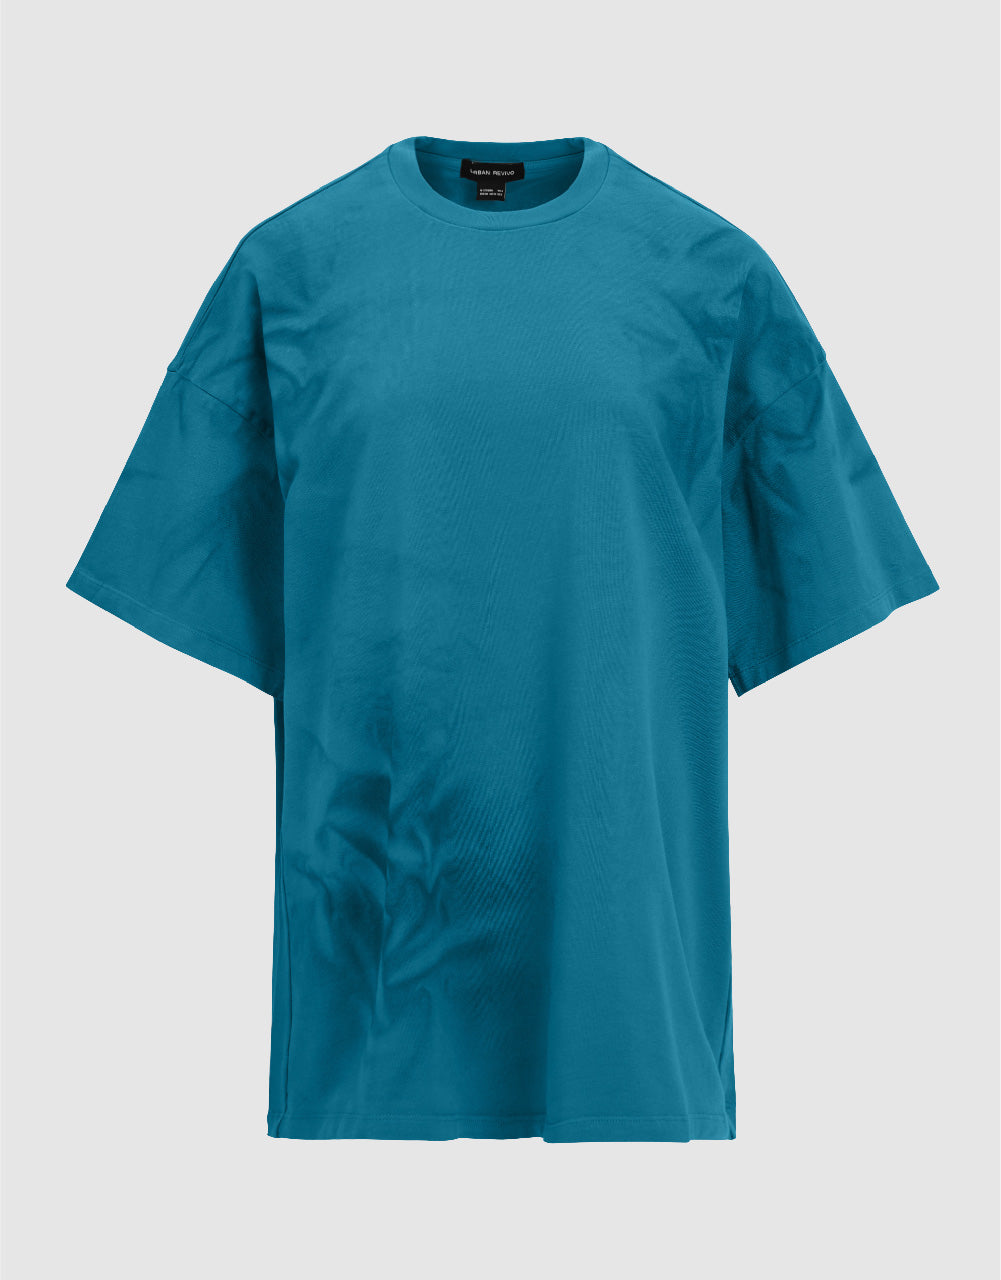 Crumpled Effect T-Shirt